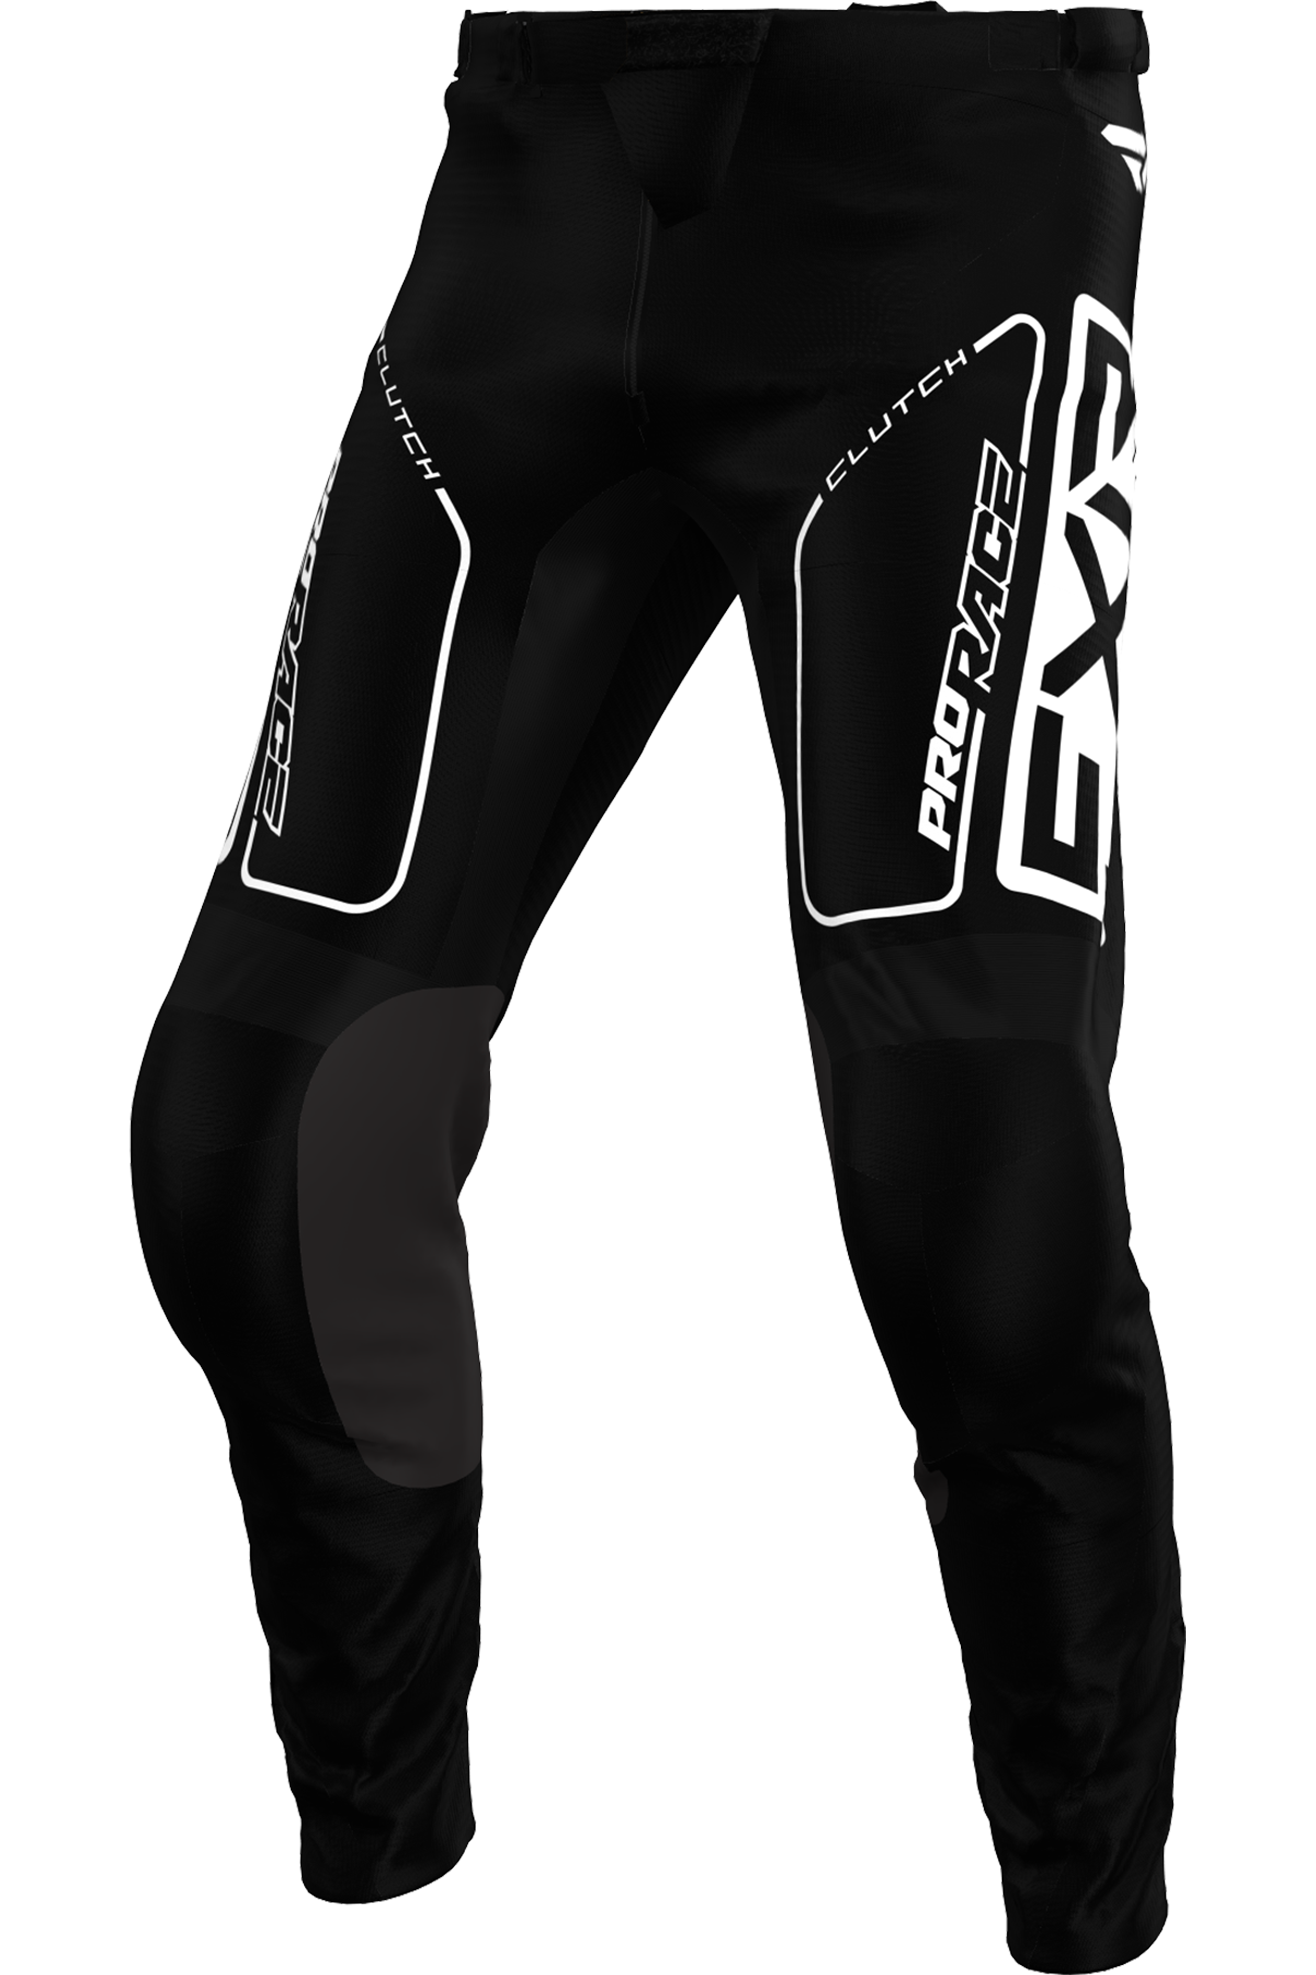 FXR Pantalones de Cross  Clutch Negro-Blanco